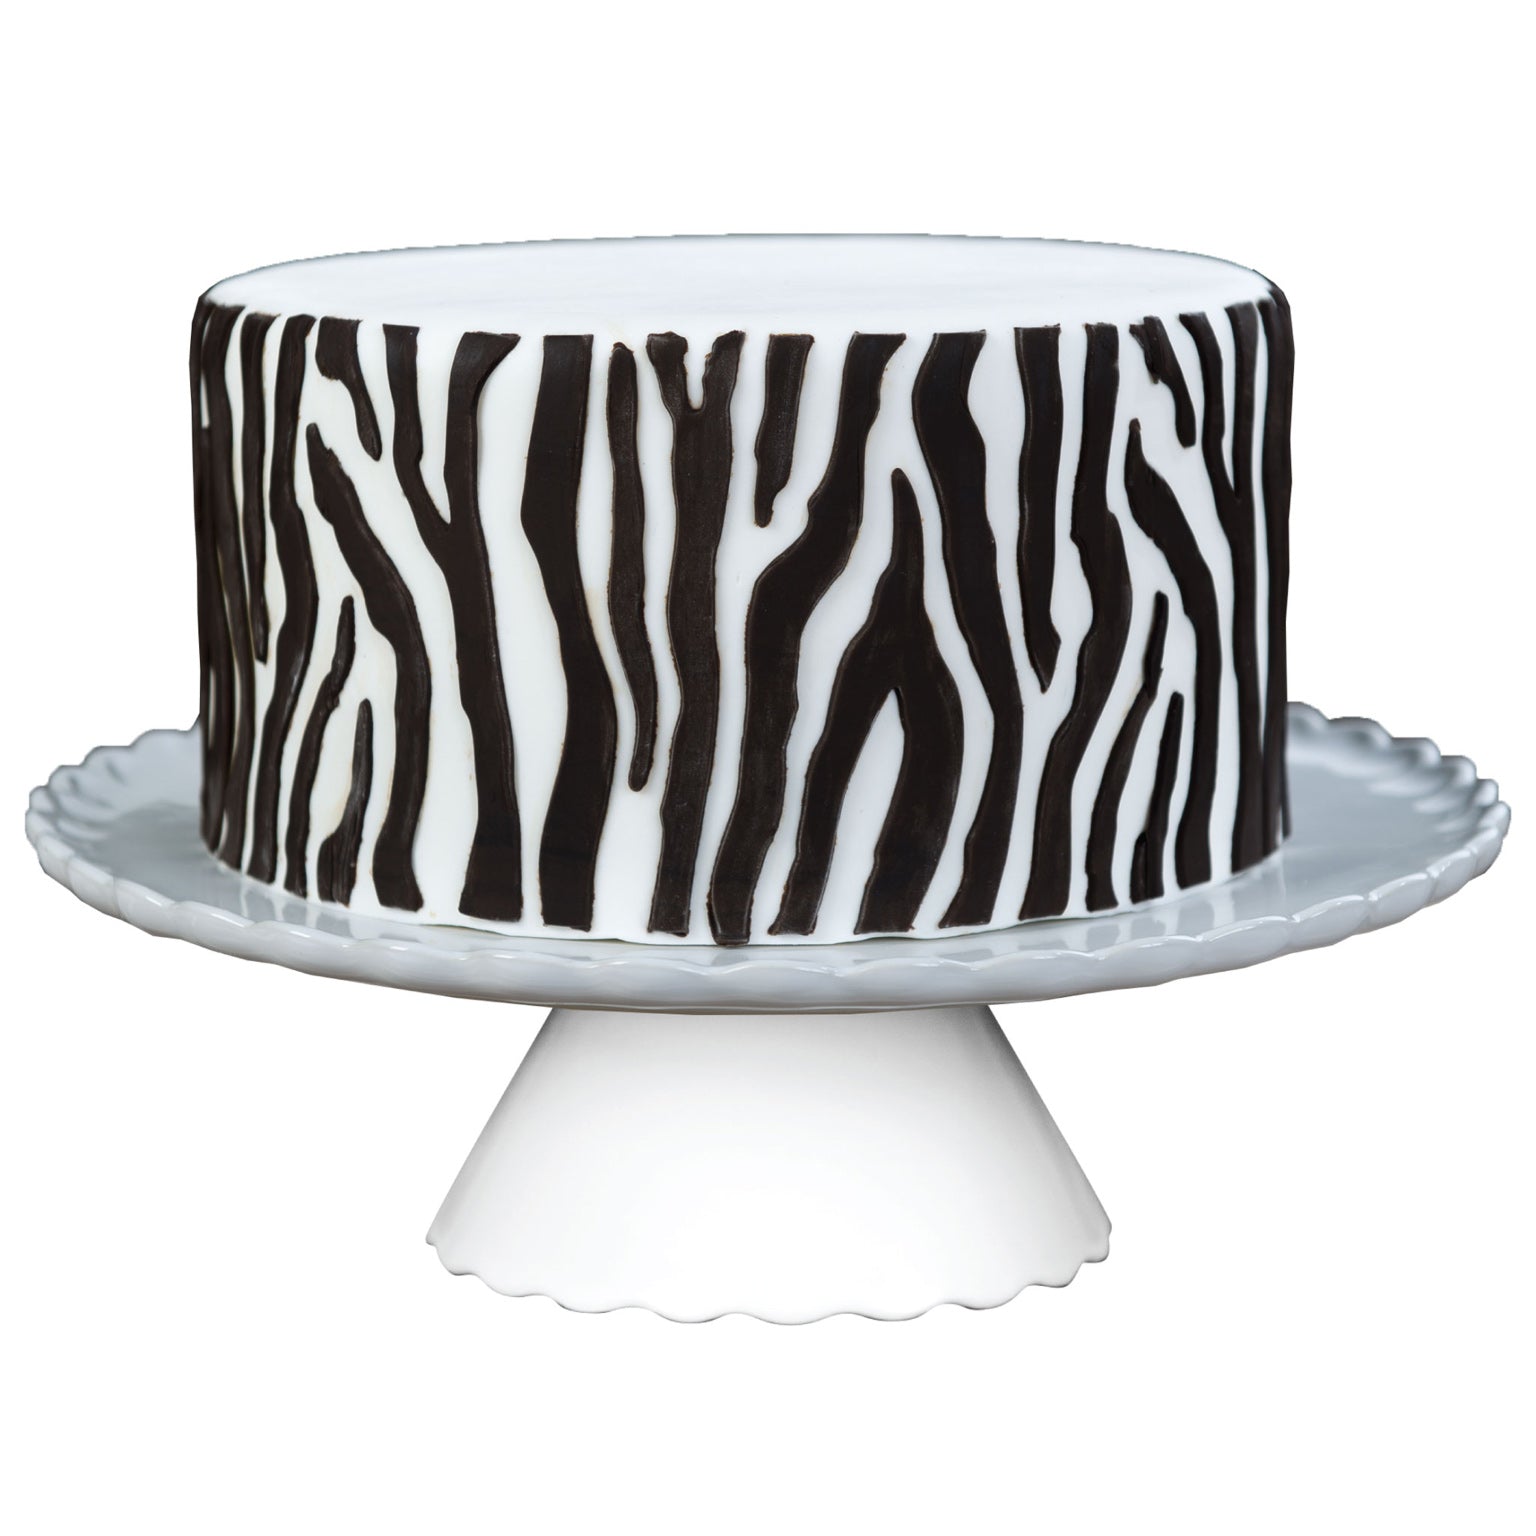 Best Zebra Cake Recipe - How to Make Zebra Cake